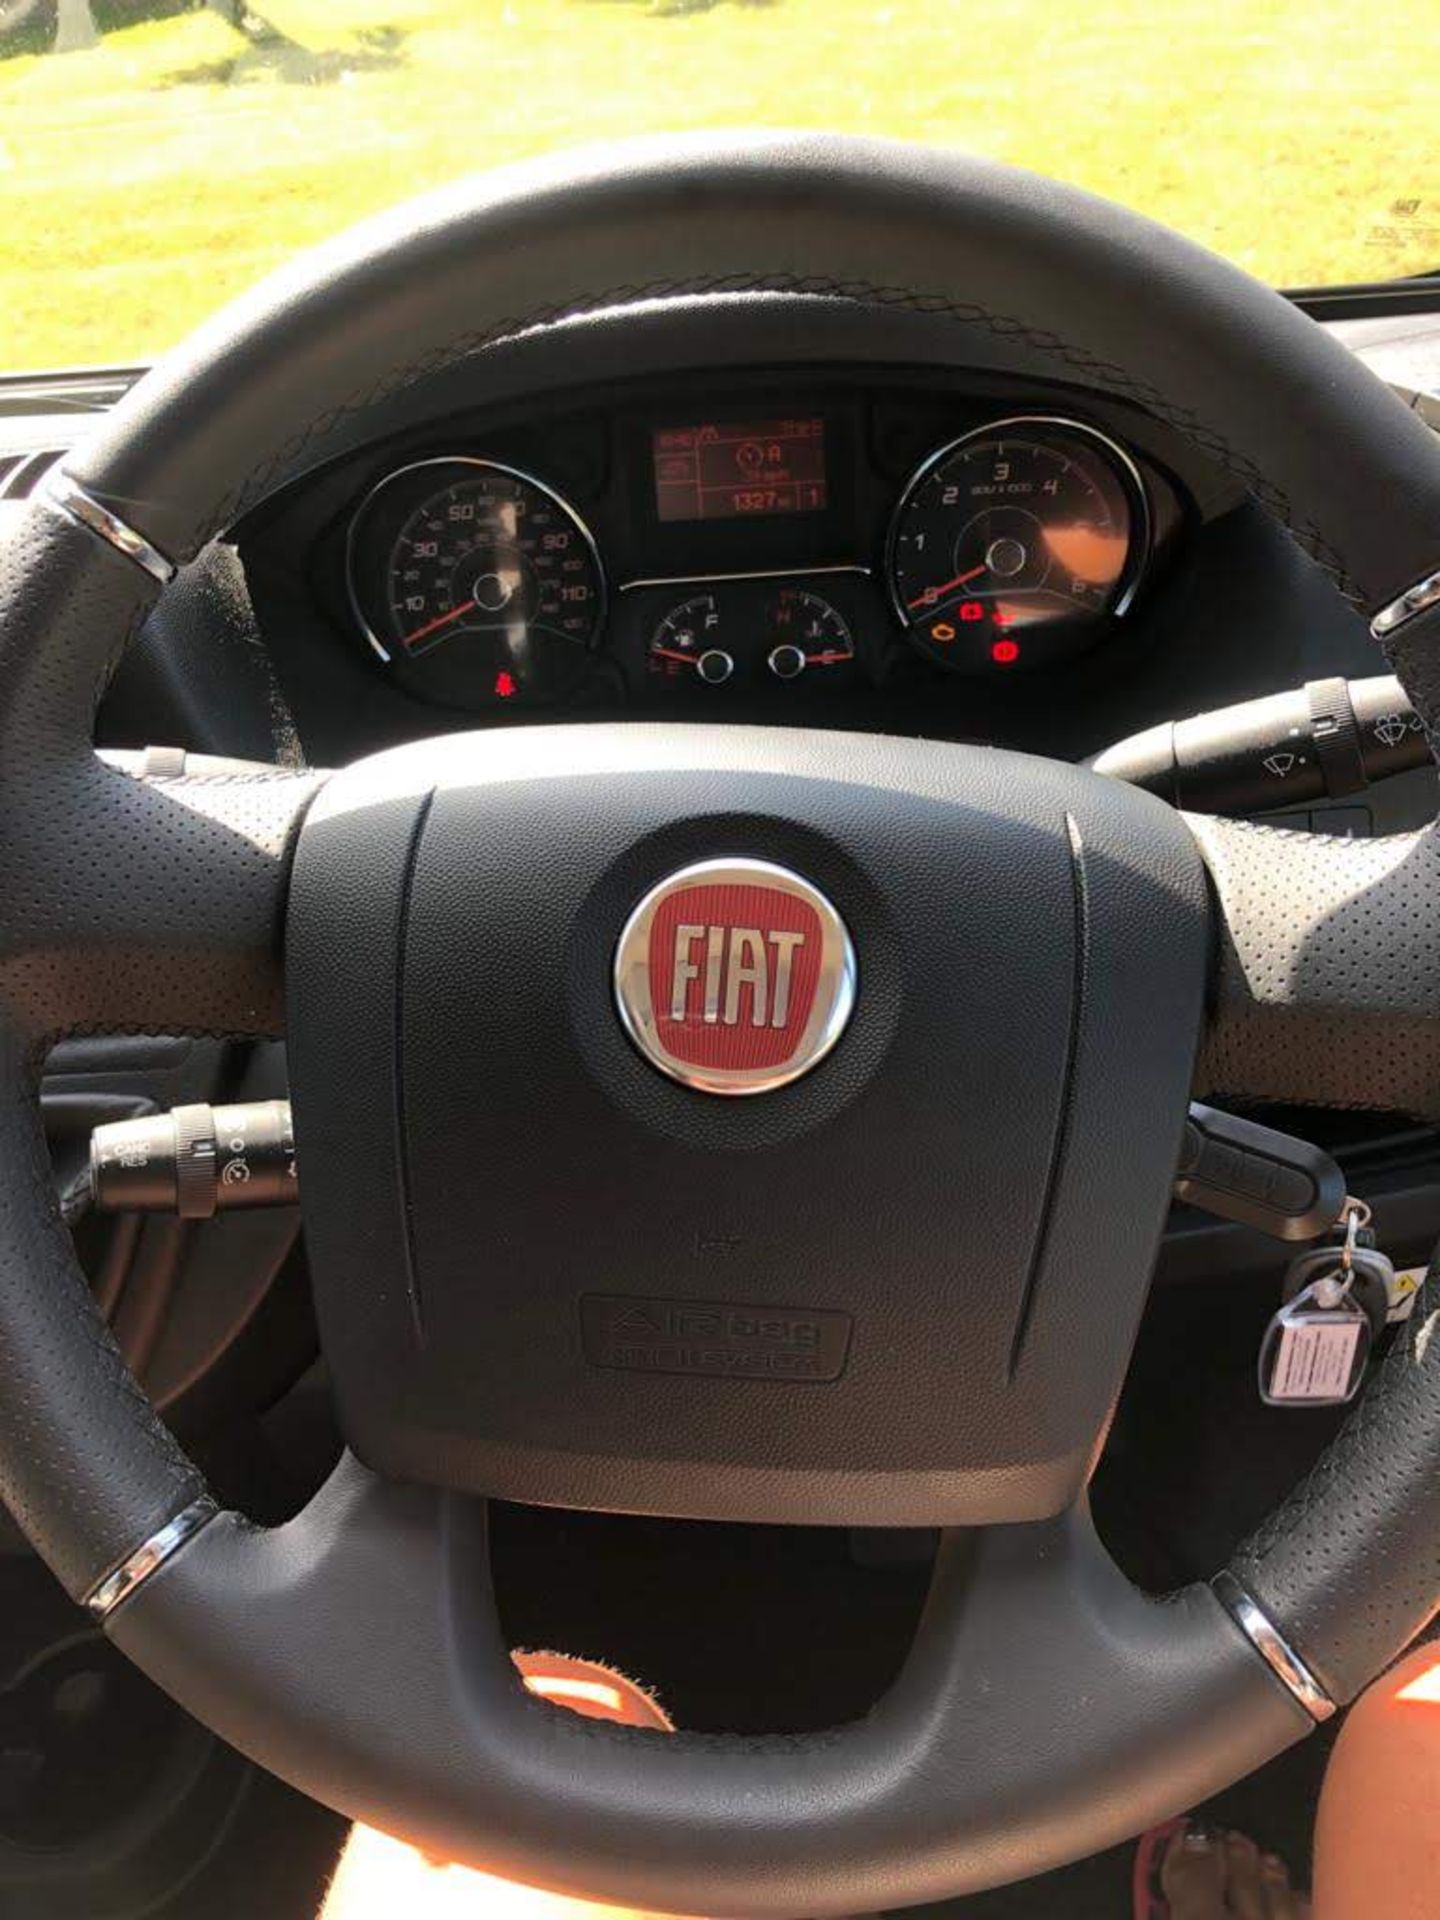 AS NEW CONDITION! 1K MILES! 2018 HOBBY FIAT OPTIMA PREMIUM AUTO T65 FL 4 BERTHMOTOR-HOME / CARAVAN - Image 51 of 93